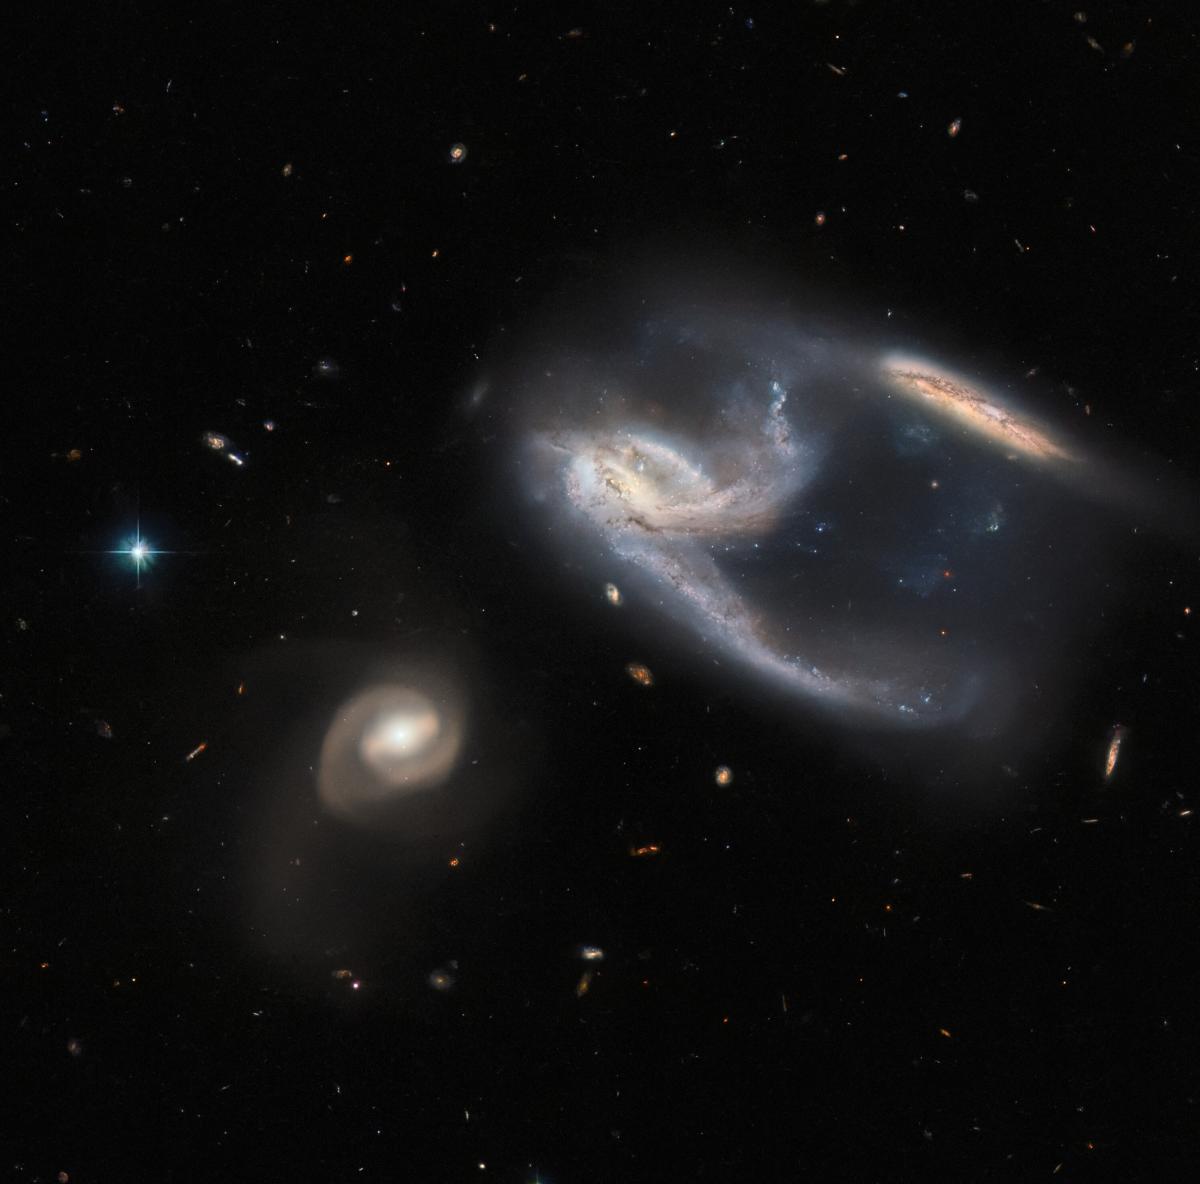 Група галактик знаходиться в сузір’ї Фенікс / фото ESA/Hubble & NASA, J. Dalcanton, Dark Energy Survey, DOE, FNAL, DECam, CTIO, NOIRLab/NSF/AURA, ESO; J. Schmidt